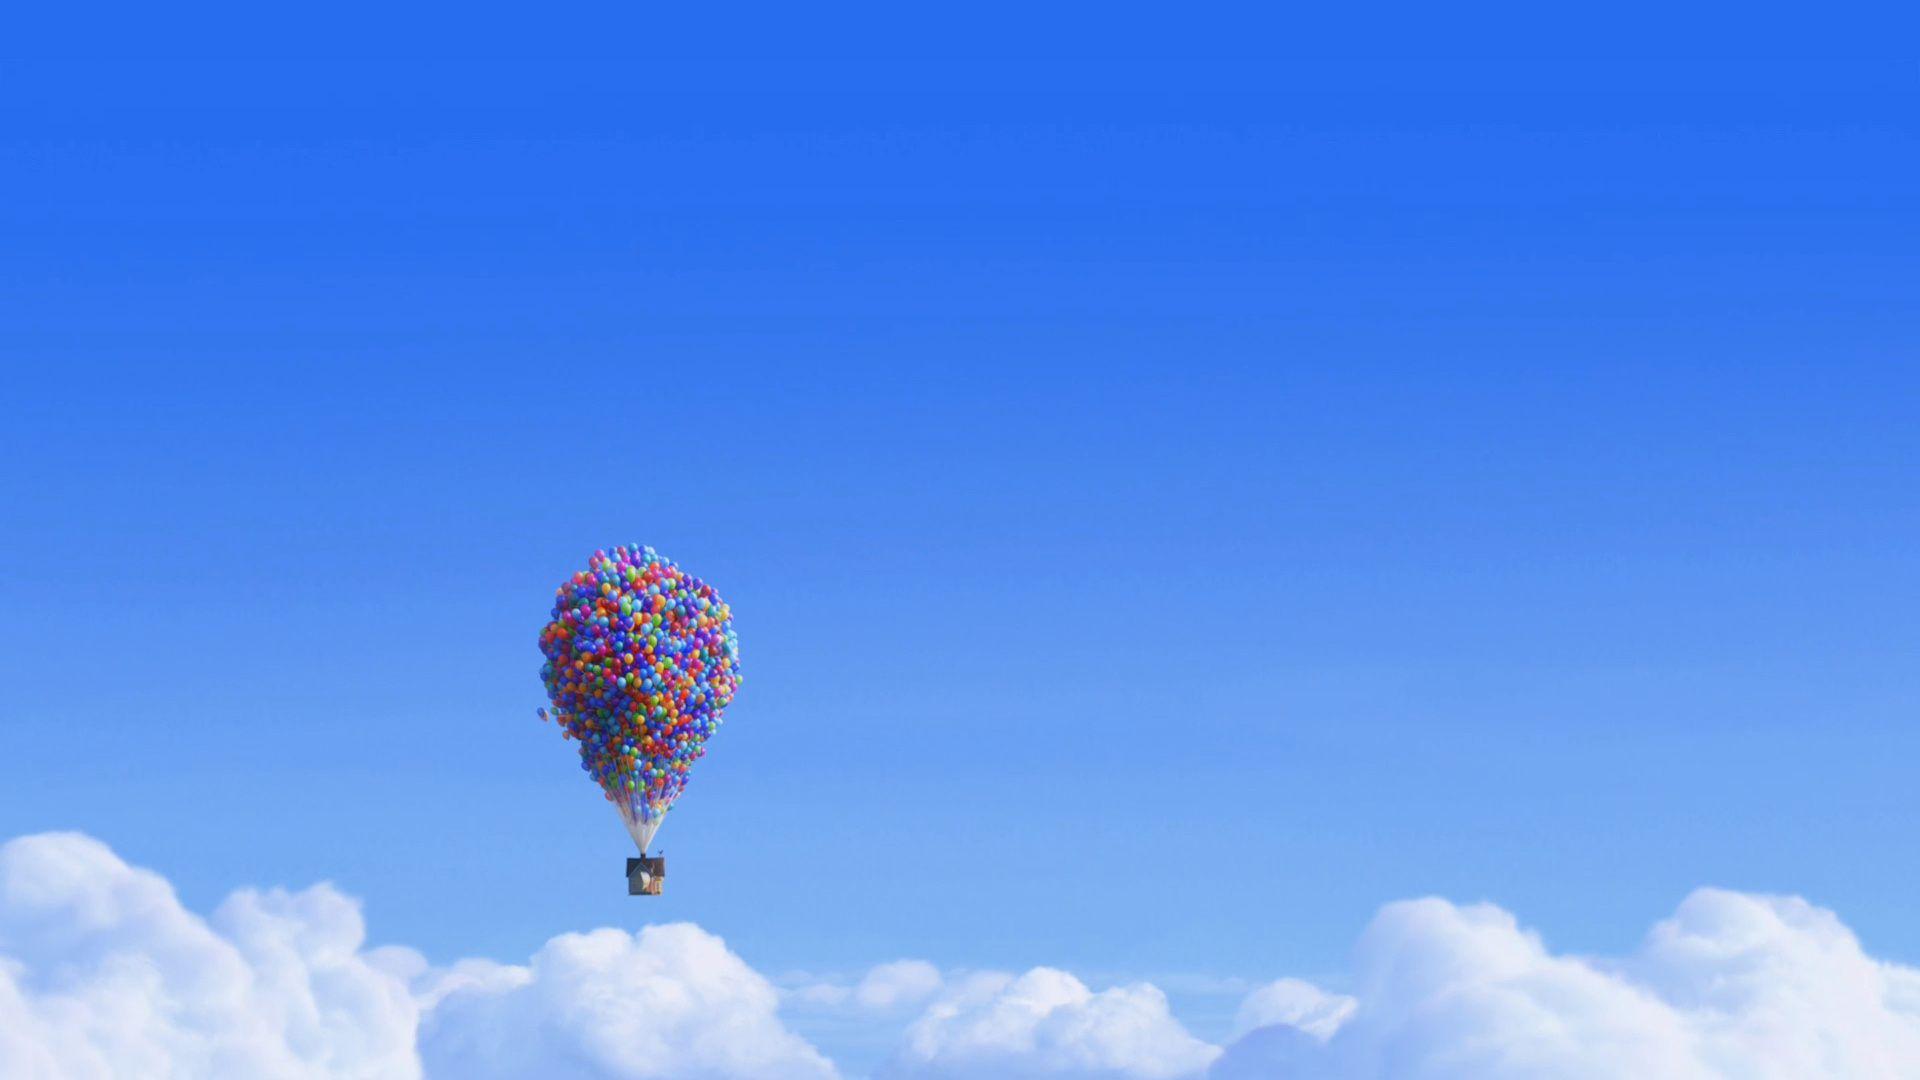 Pixar Up Movie desktop PC and Mac wallpaper. Free